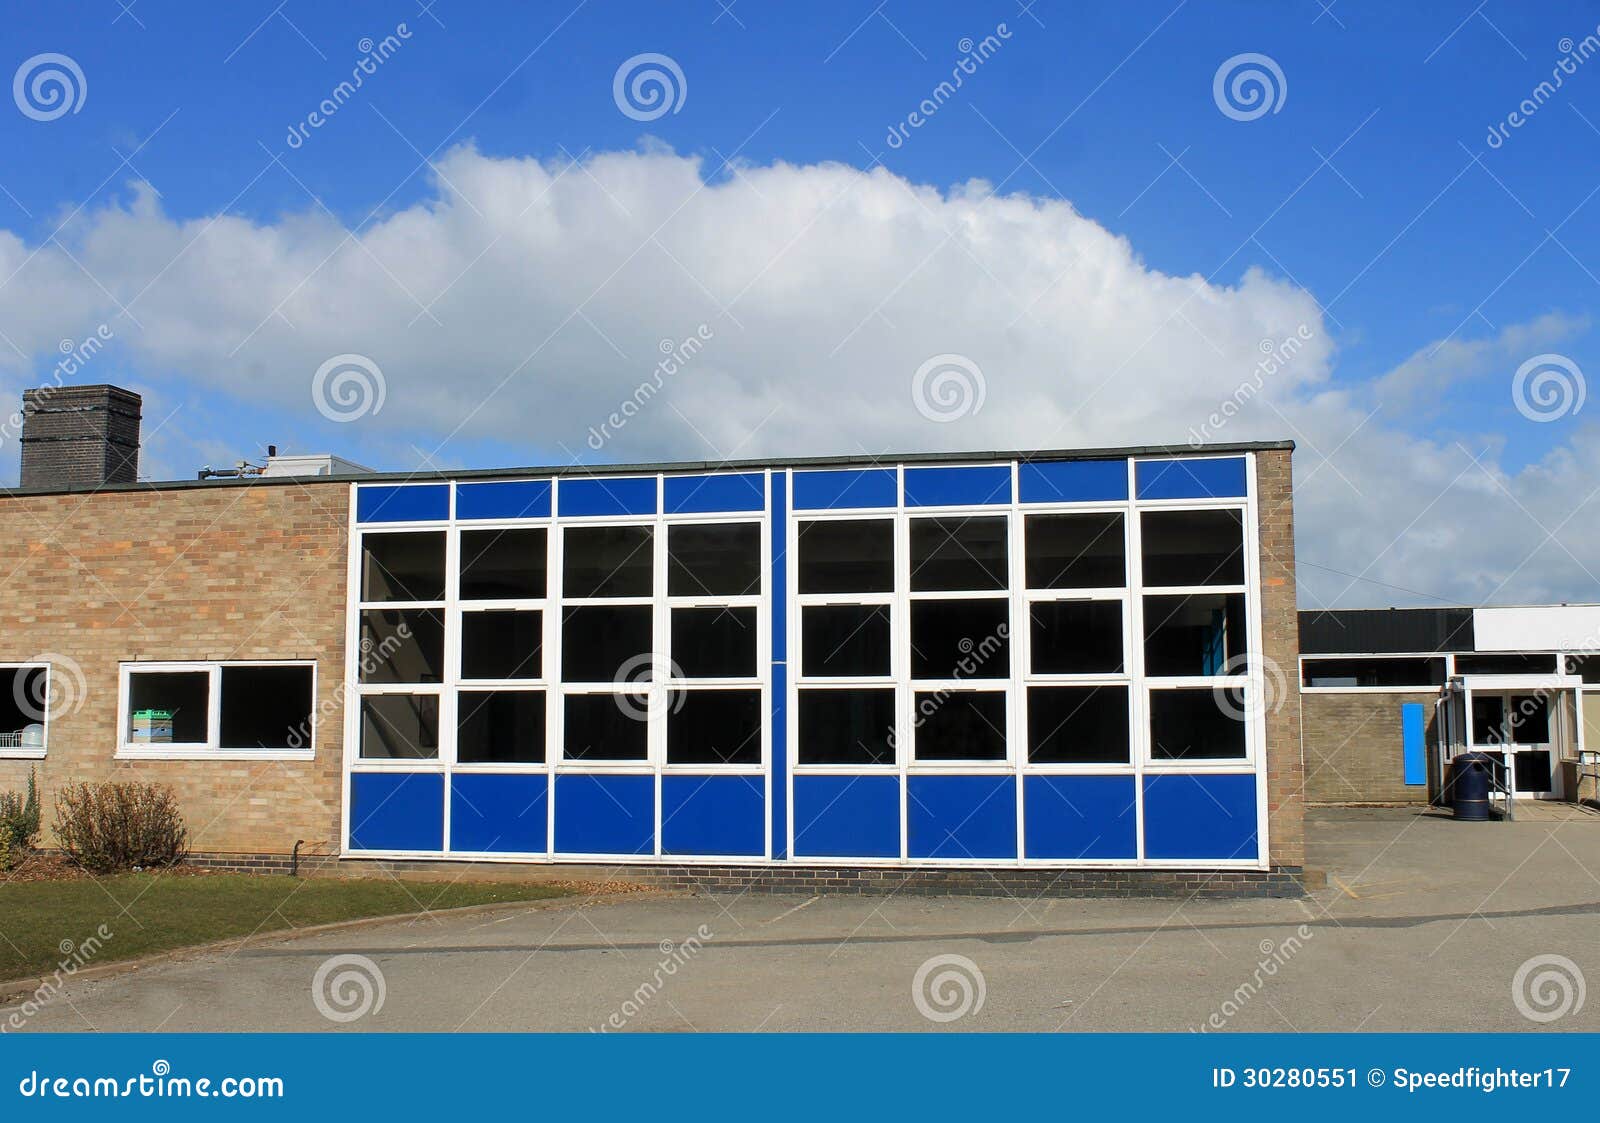 modern secondary school building